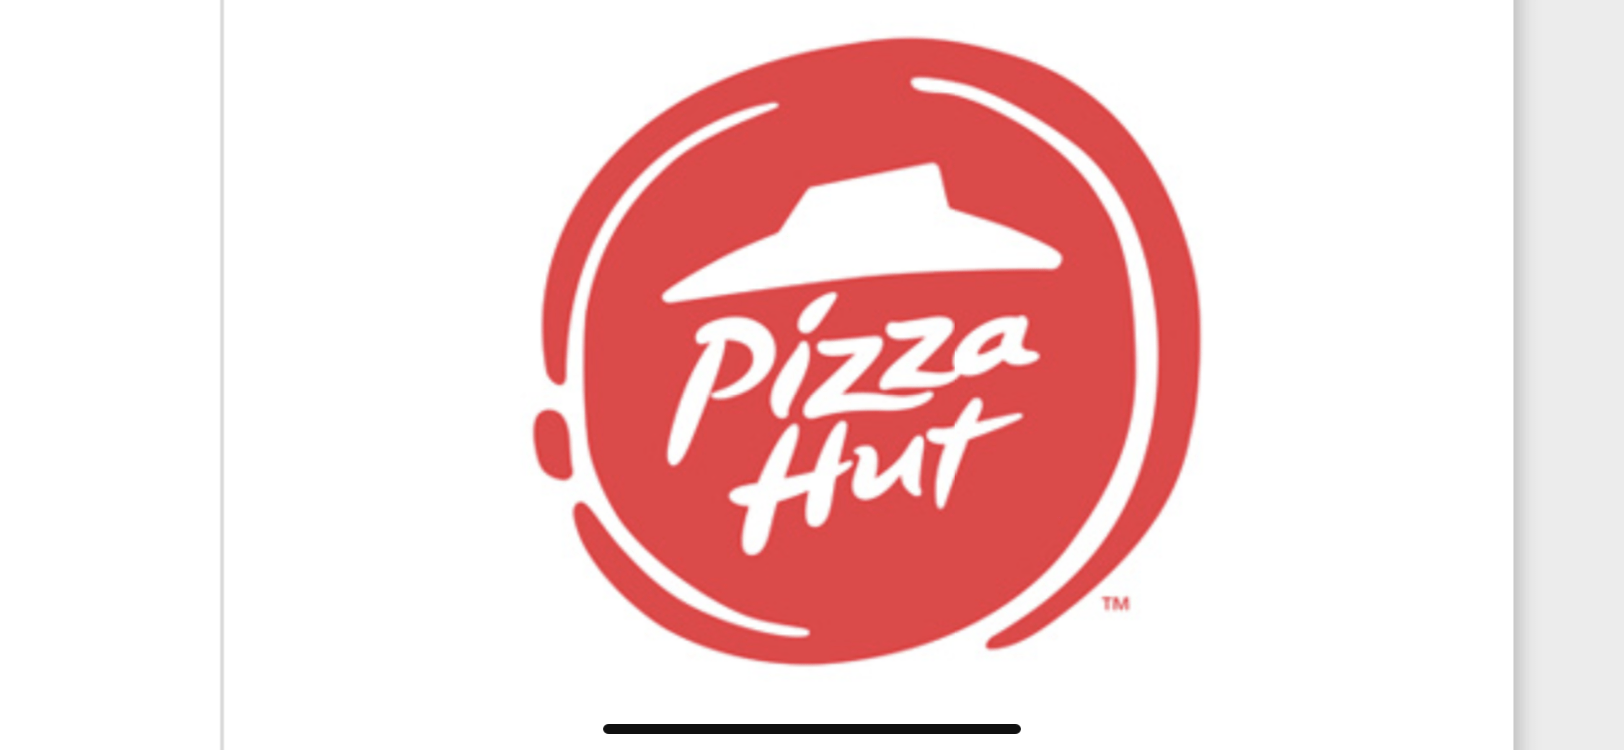 Pizza Hut logo - Business in Manotick